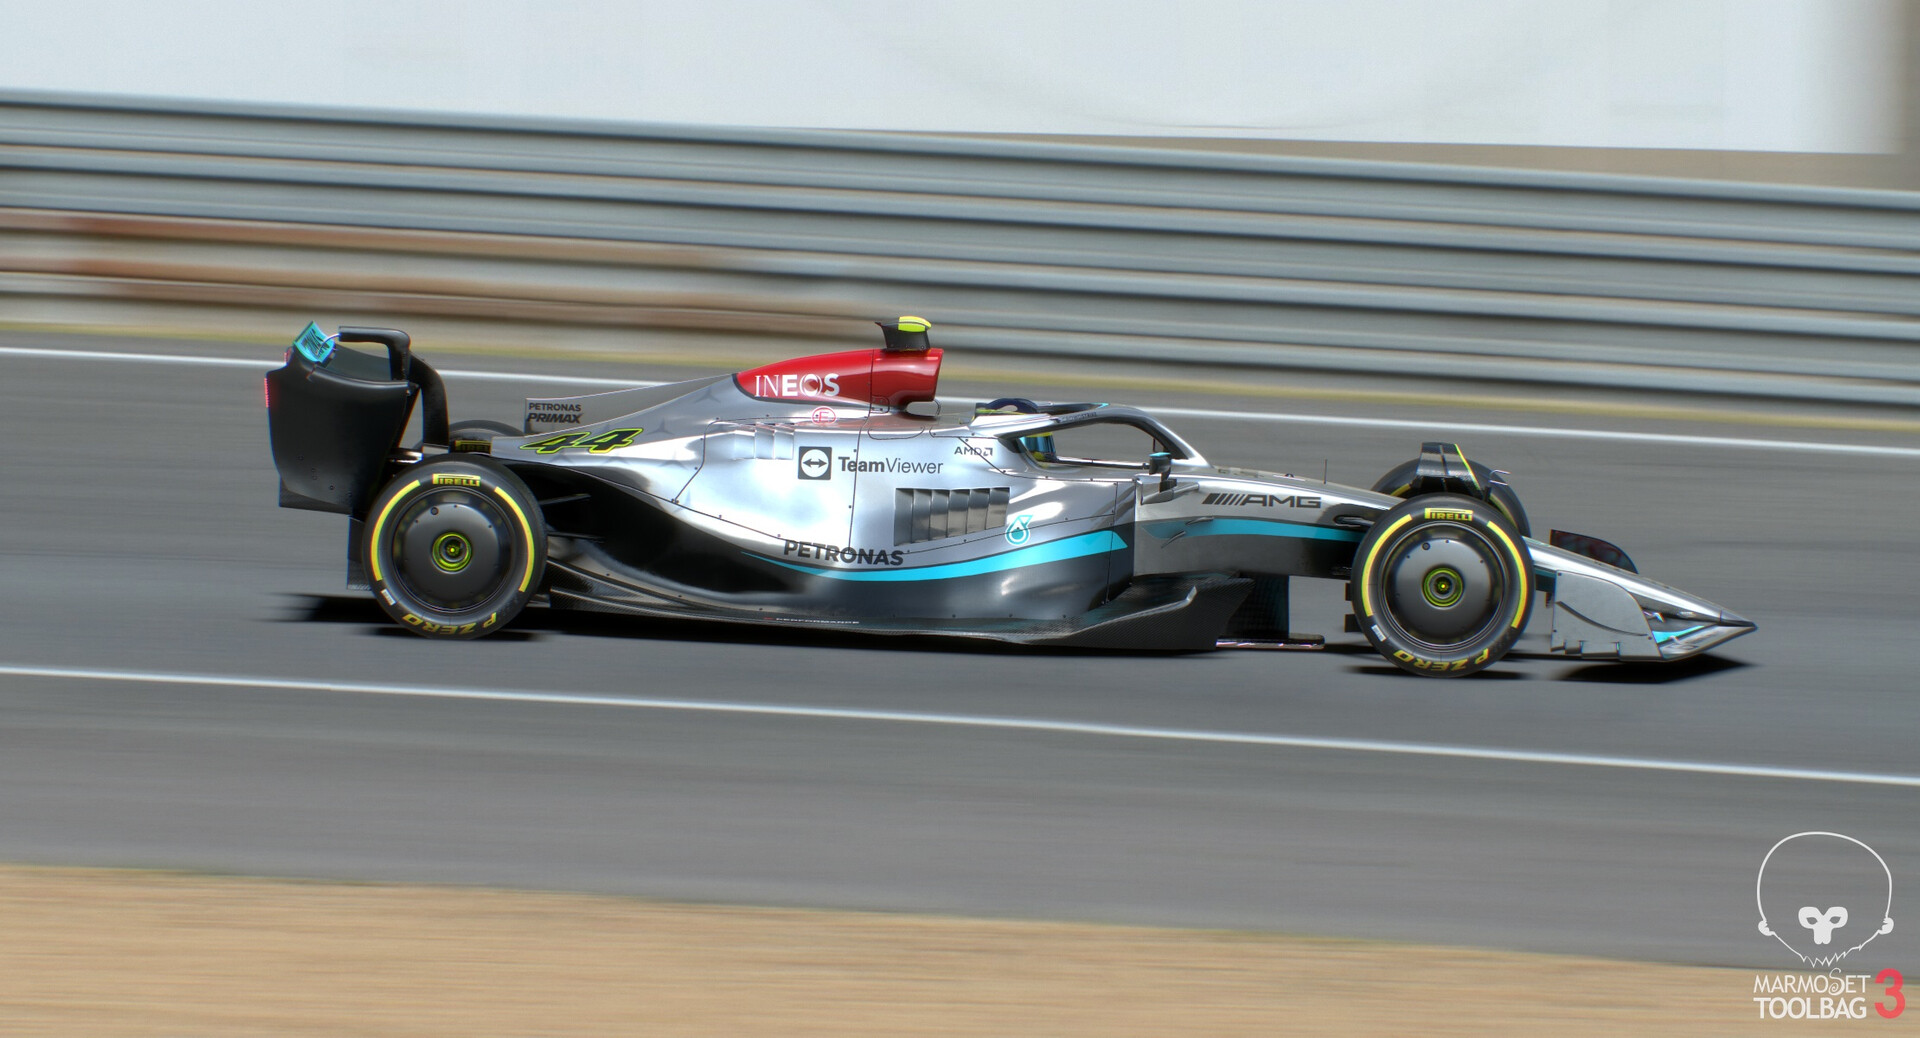 ArtStation - Formula 1 Season 2020 F1 Race Car 3D model